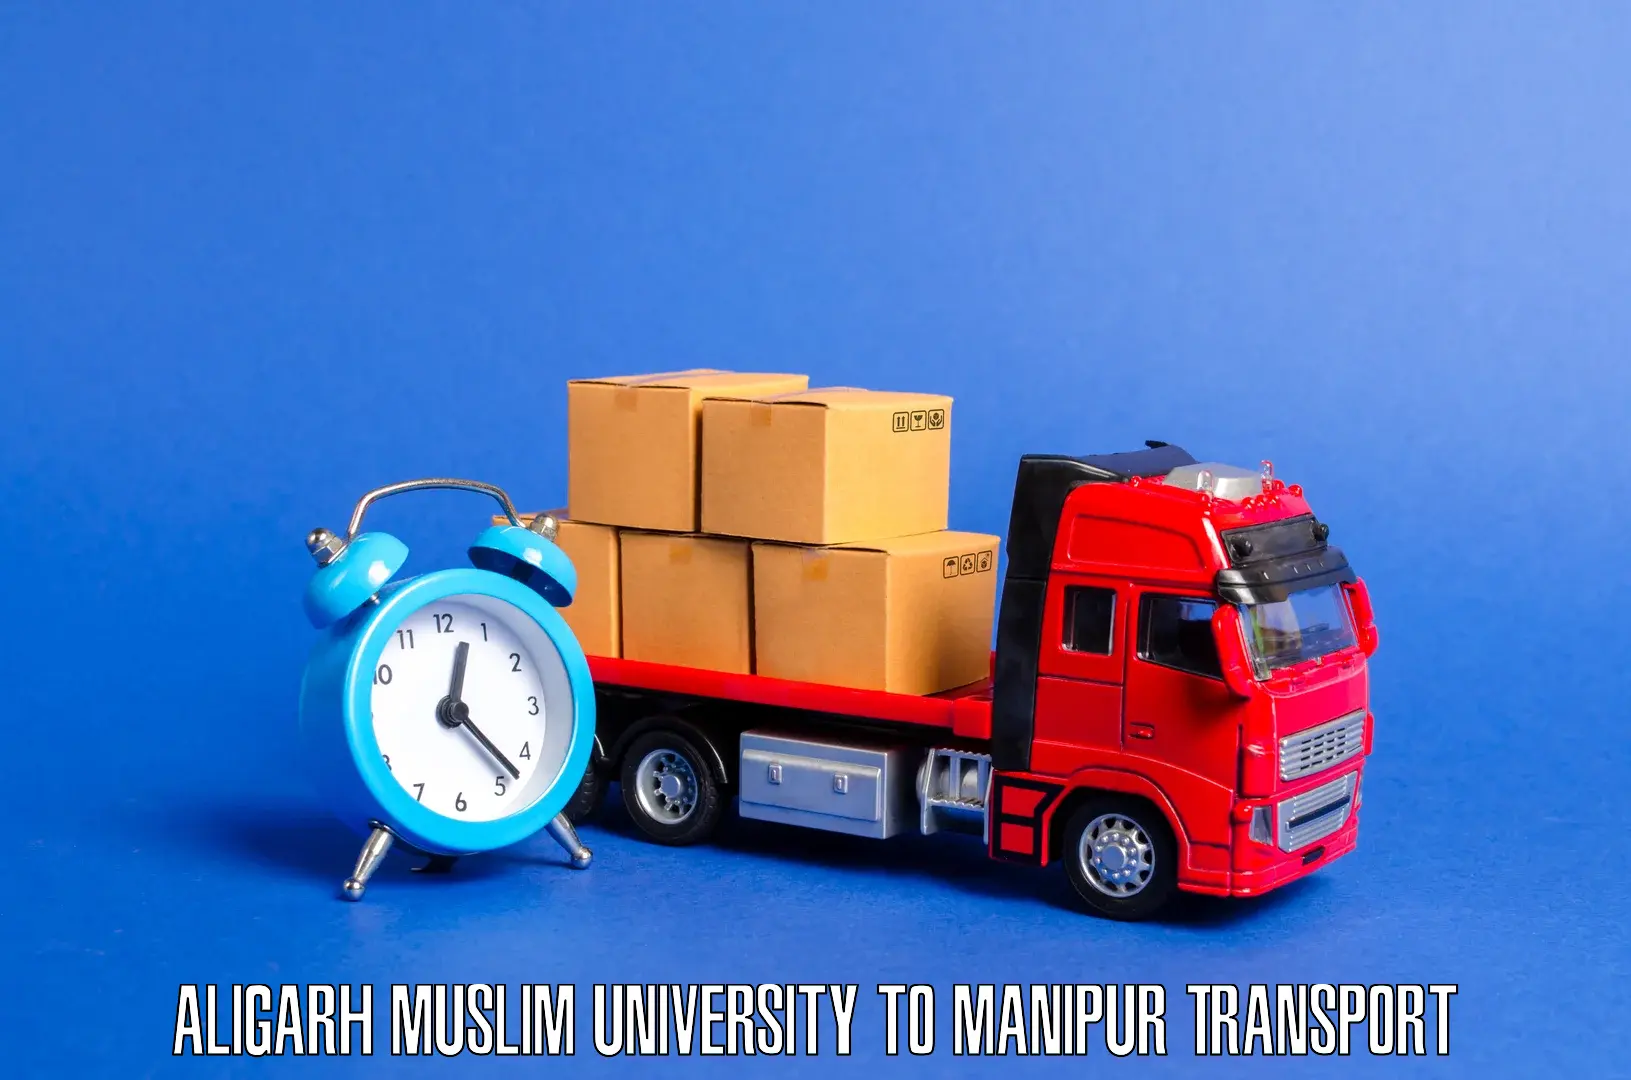 Lorry transport service Aligarh Muslim University to Imphal